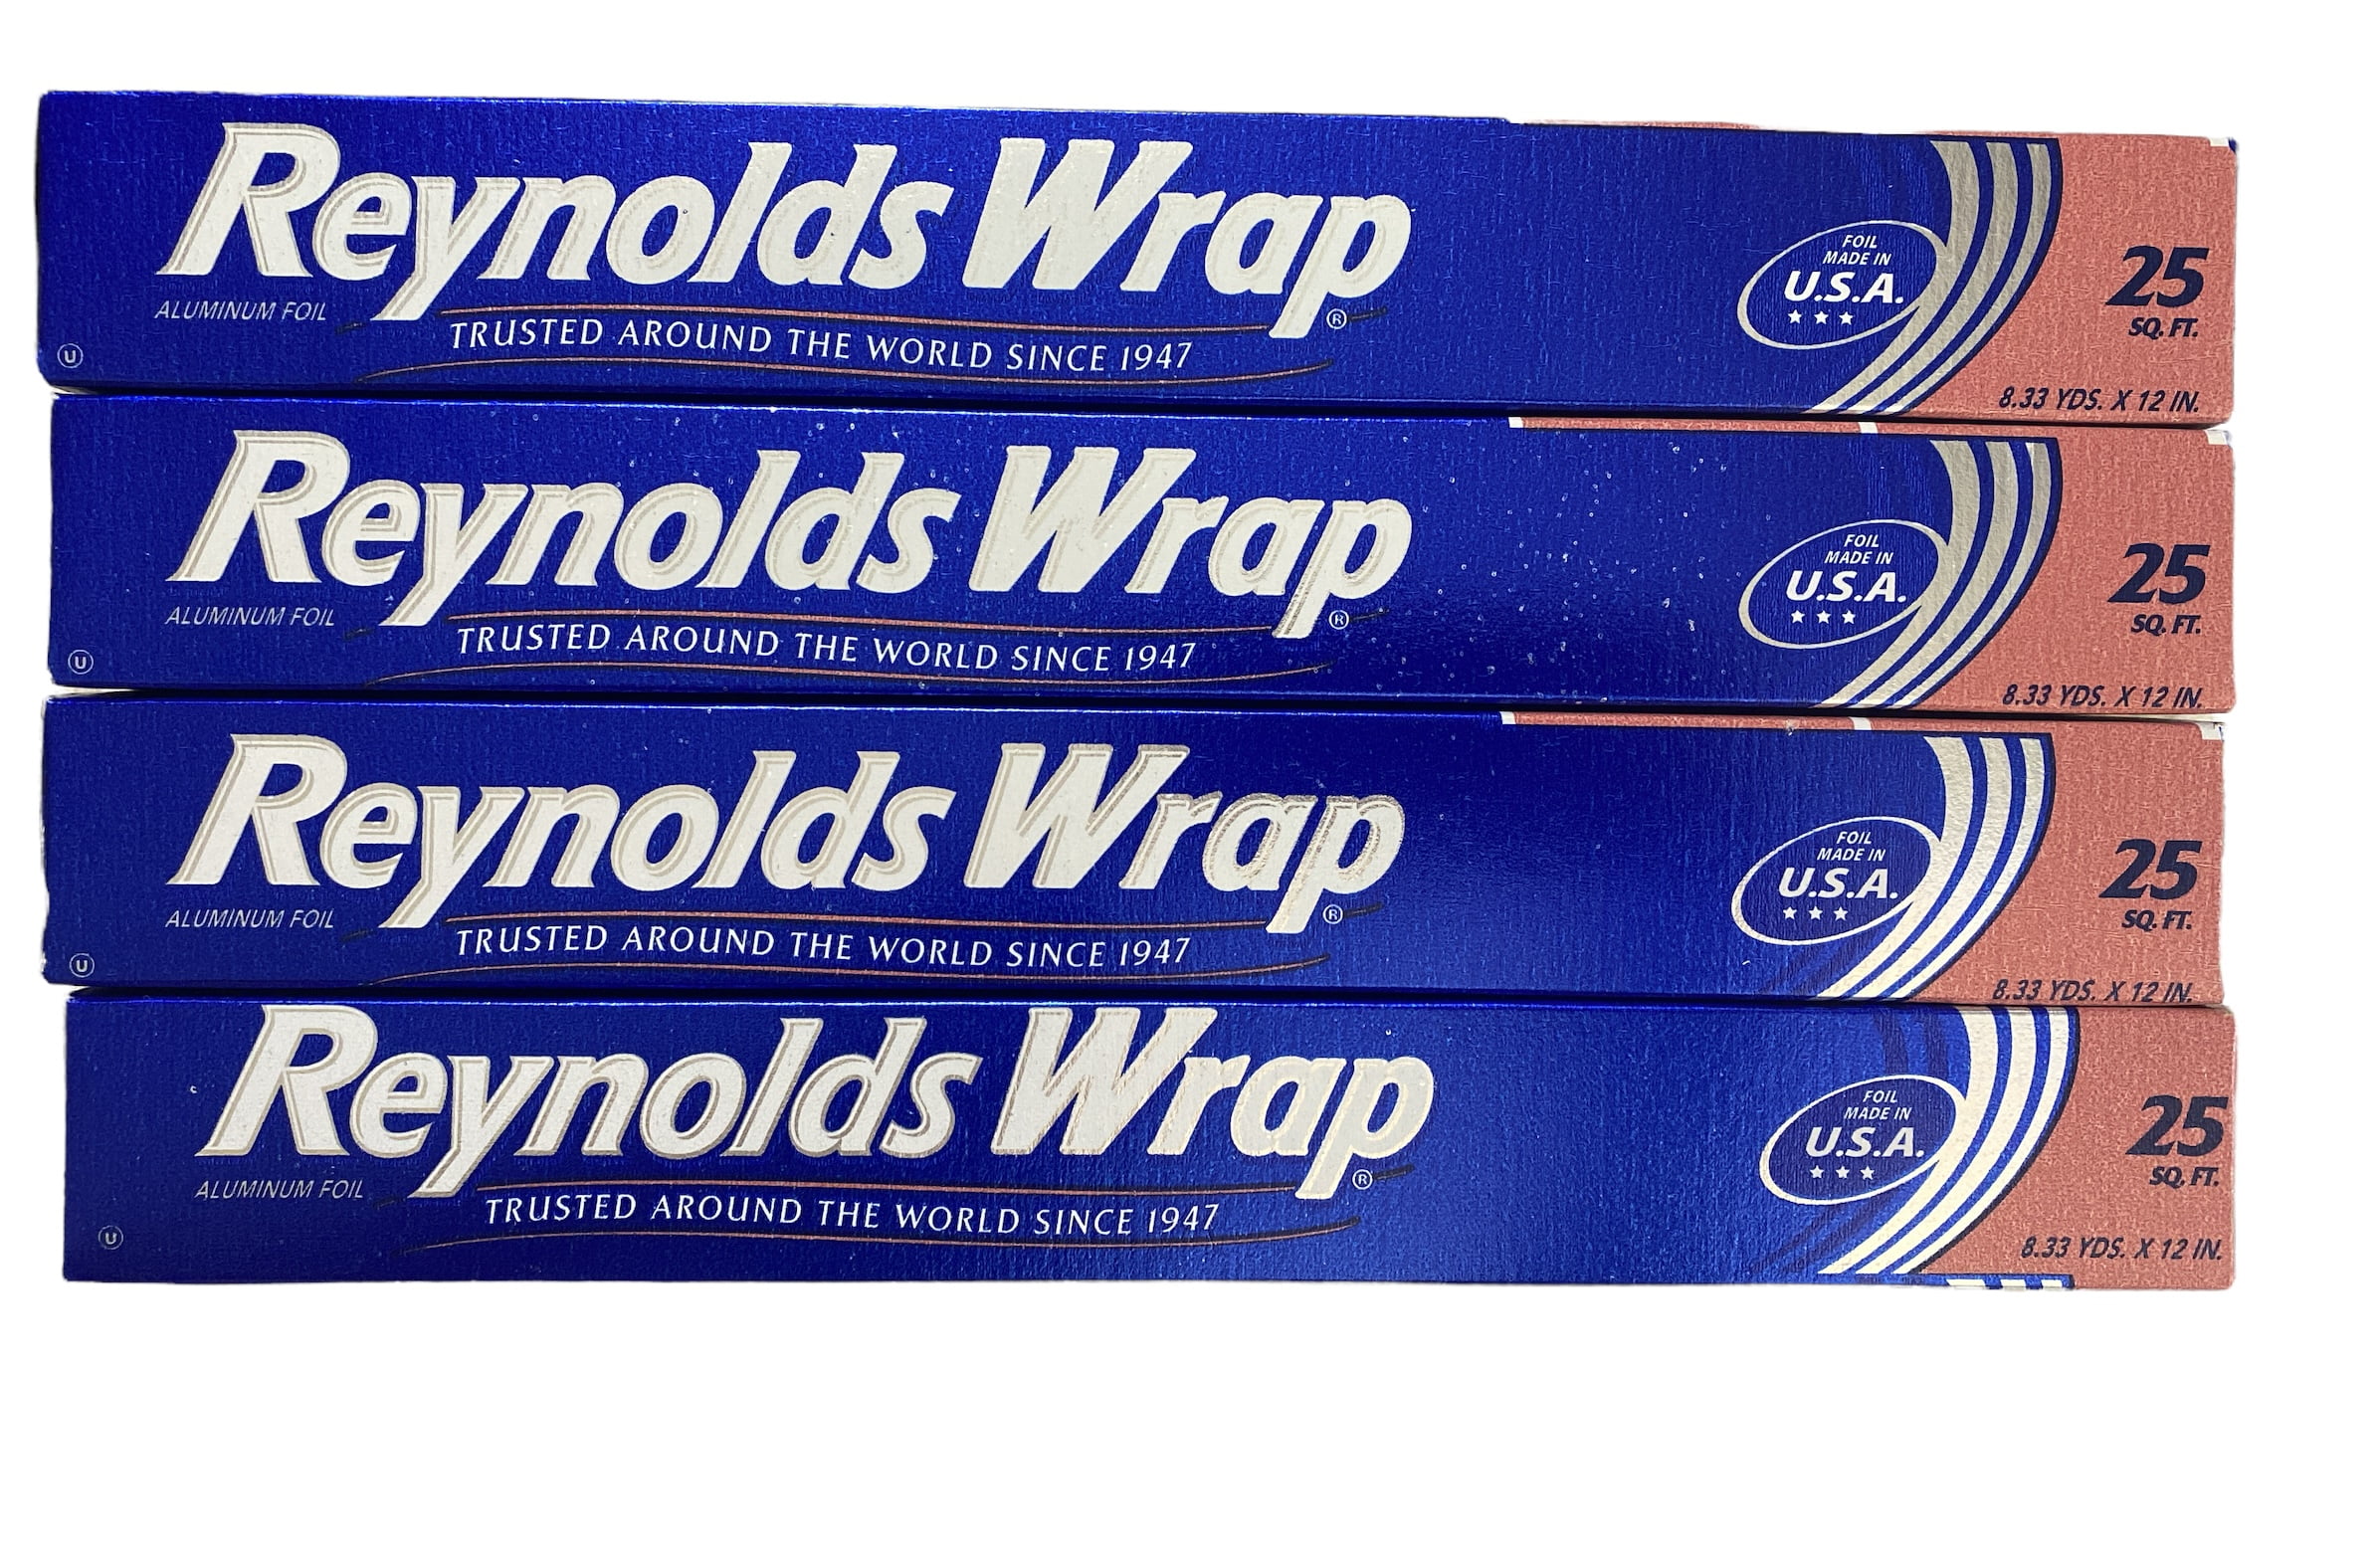 Reynolds Wrap Heavy Duty Aluminum Foil, 125 Square Feet 